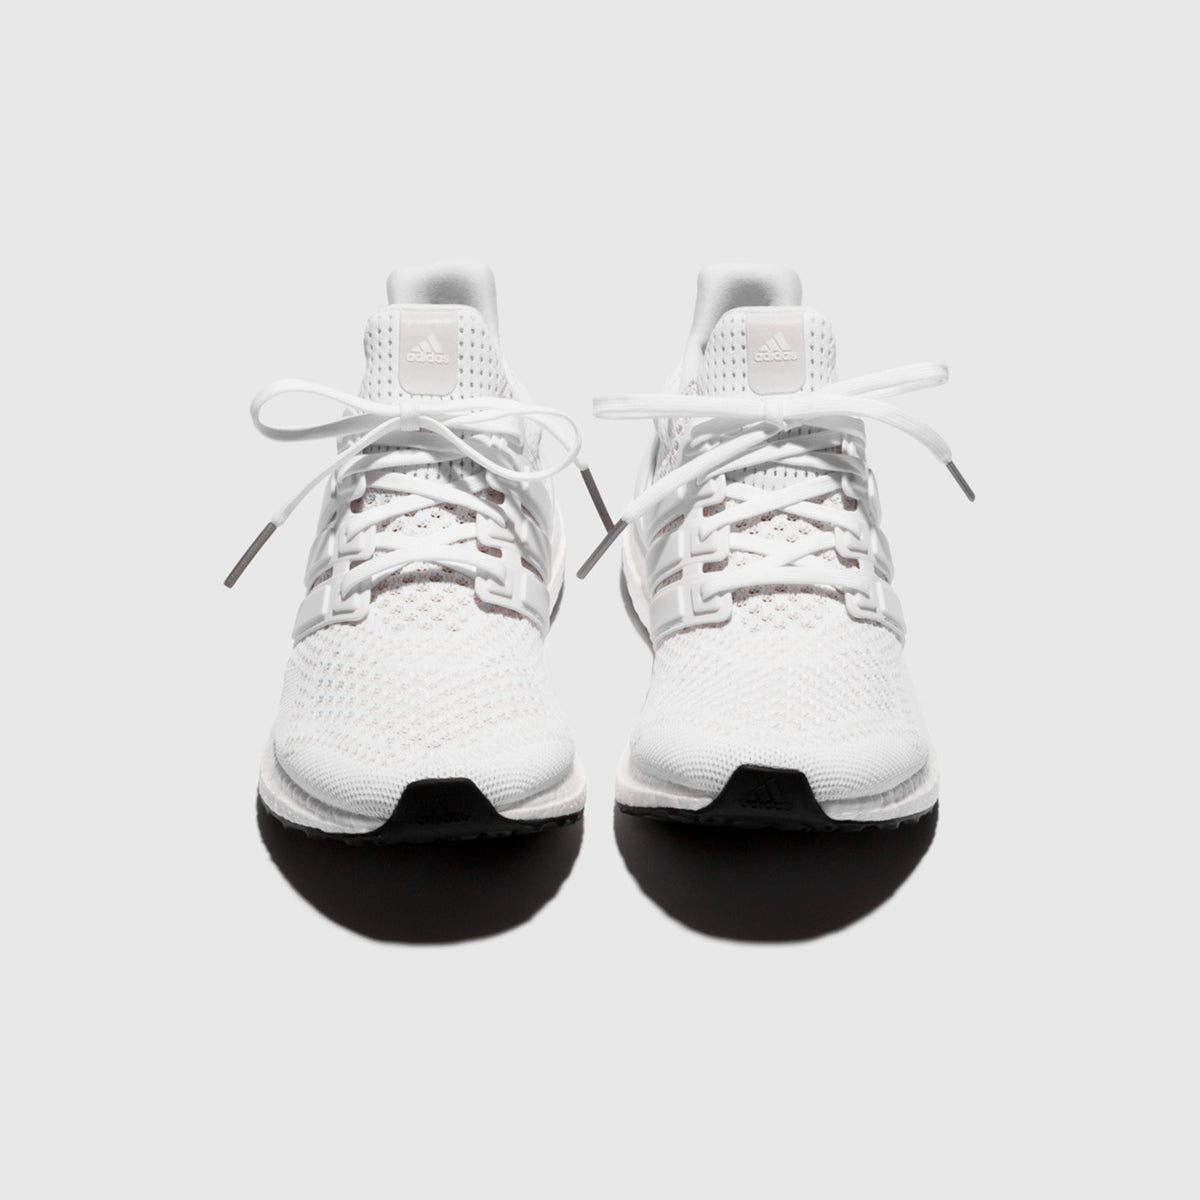 adidas ultra boost 1.0 og consortium packer shoes